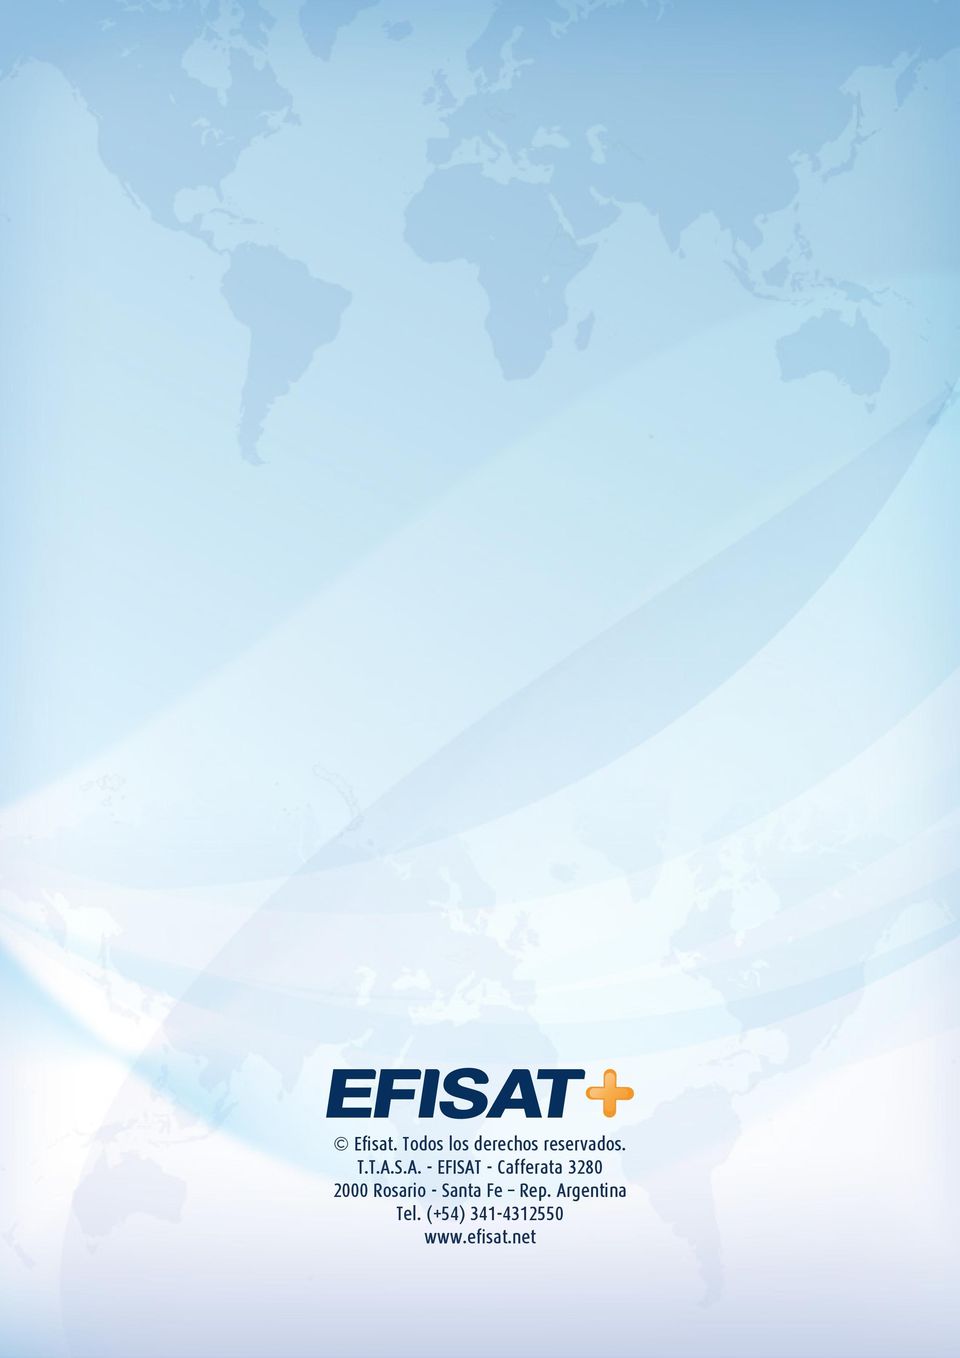 S.A. - EFISAT - Cafferata 3280 2000